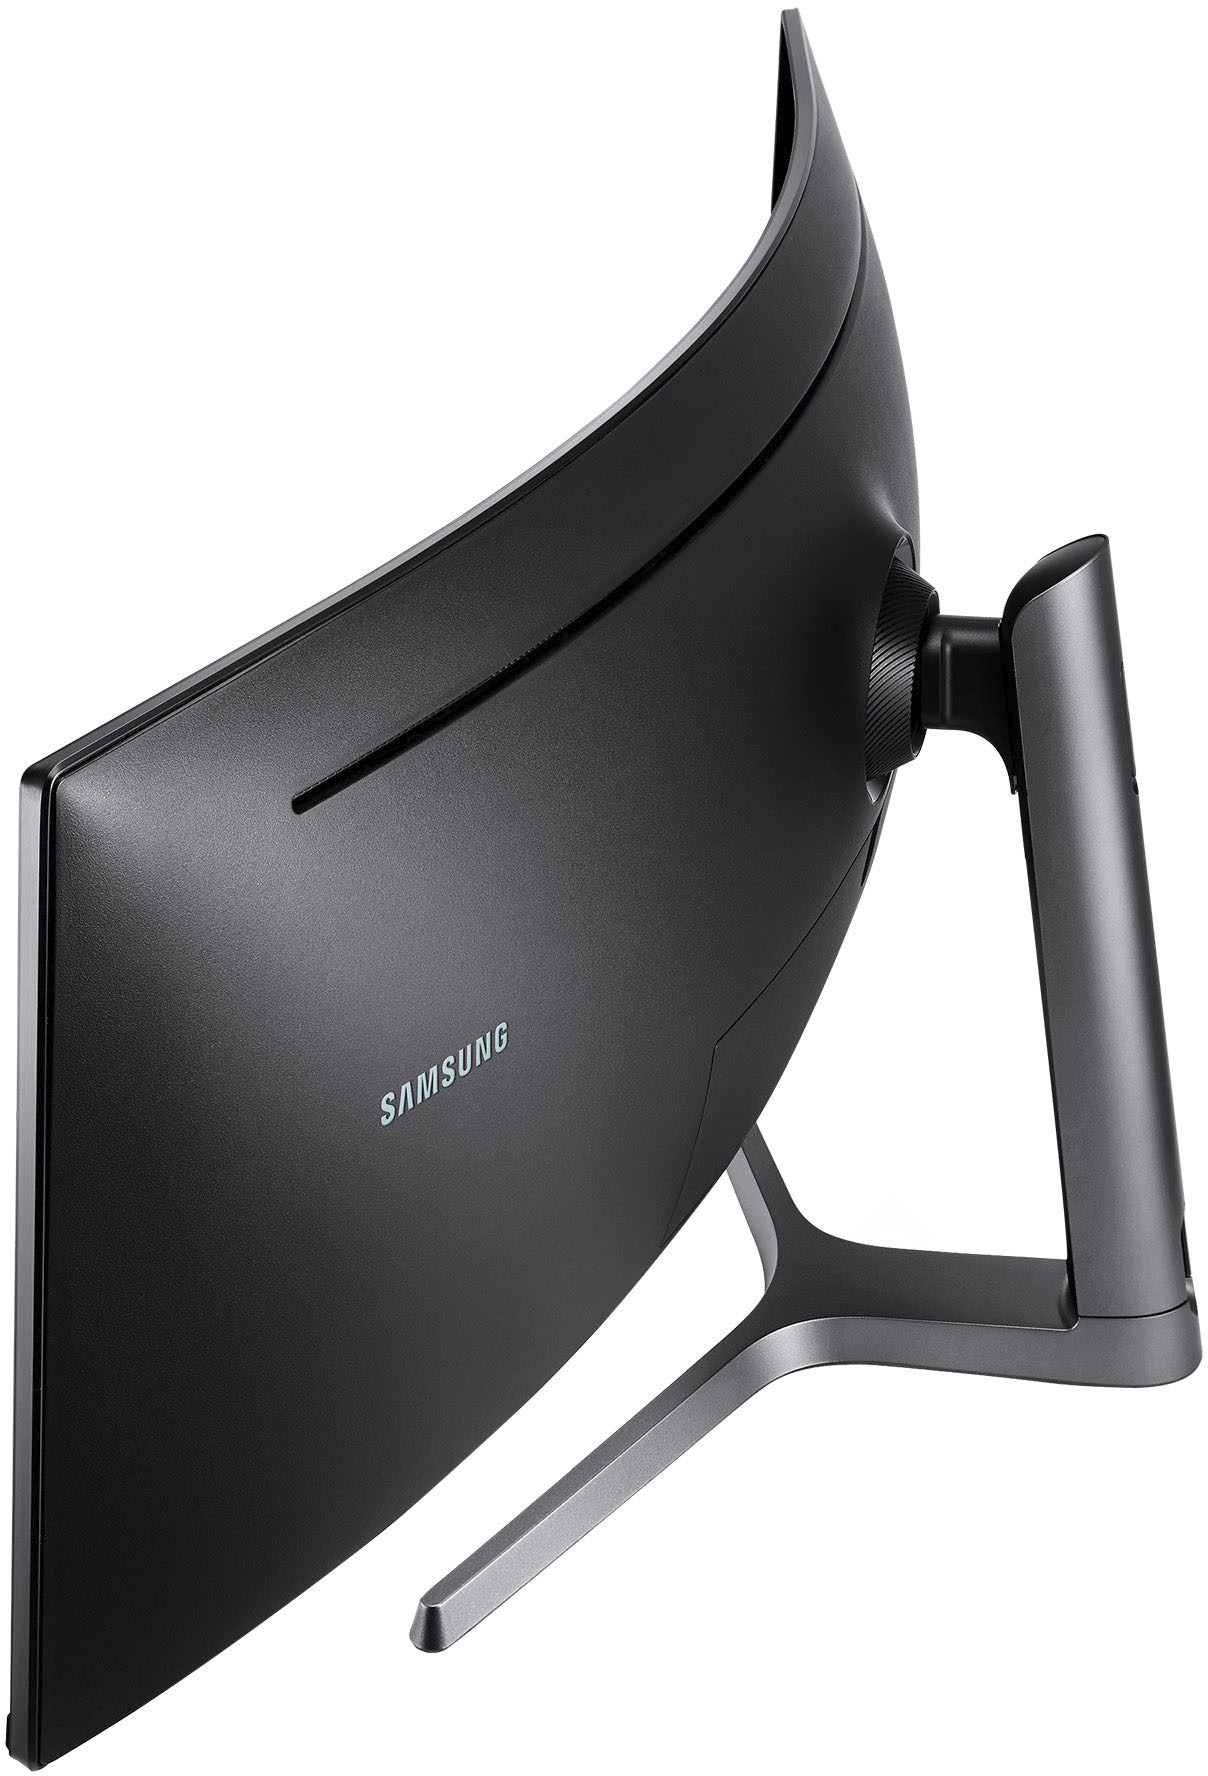 Buy Samsung 49 CHG90 QLED Gaming Monitor - Microsoft Store